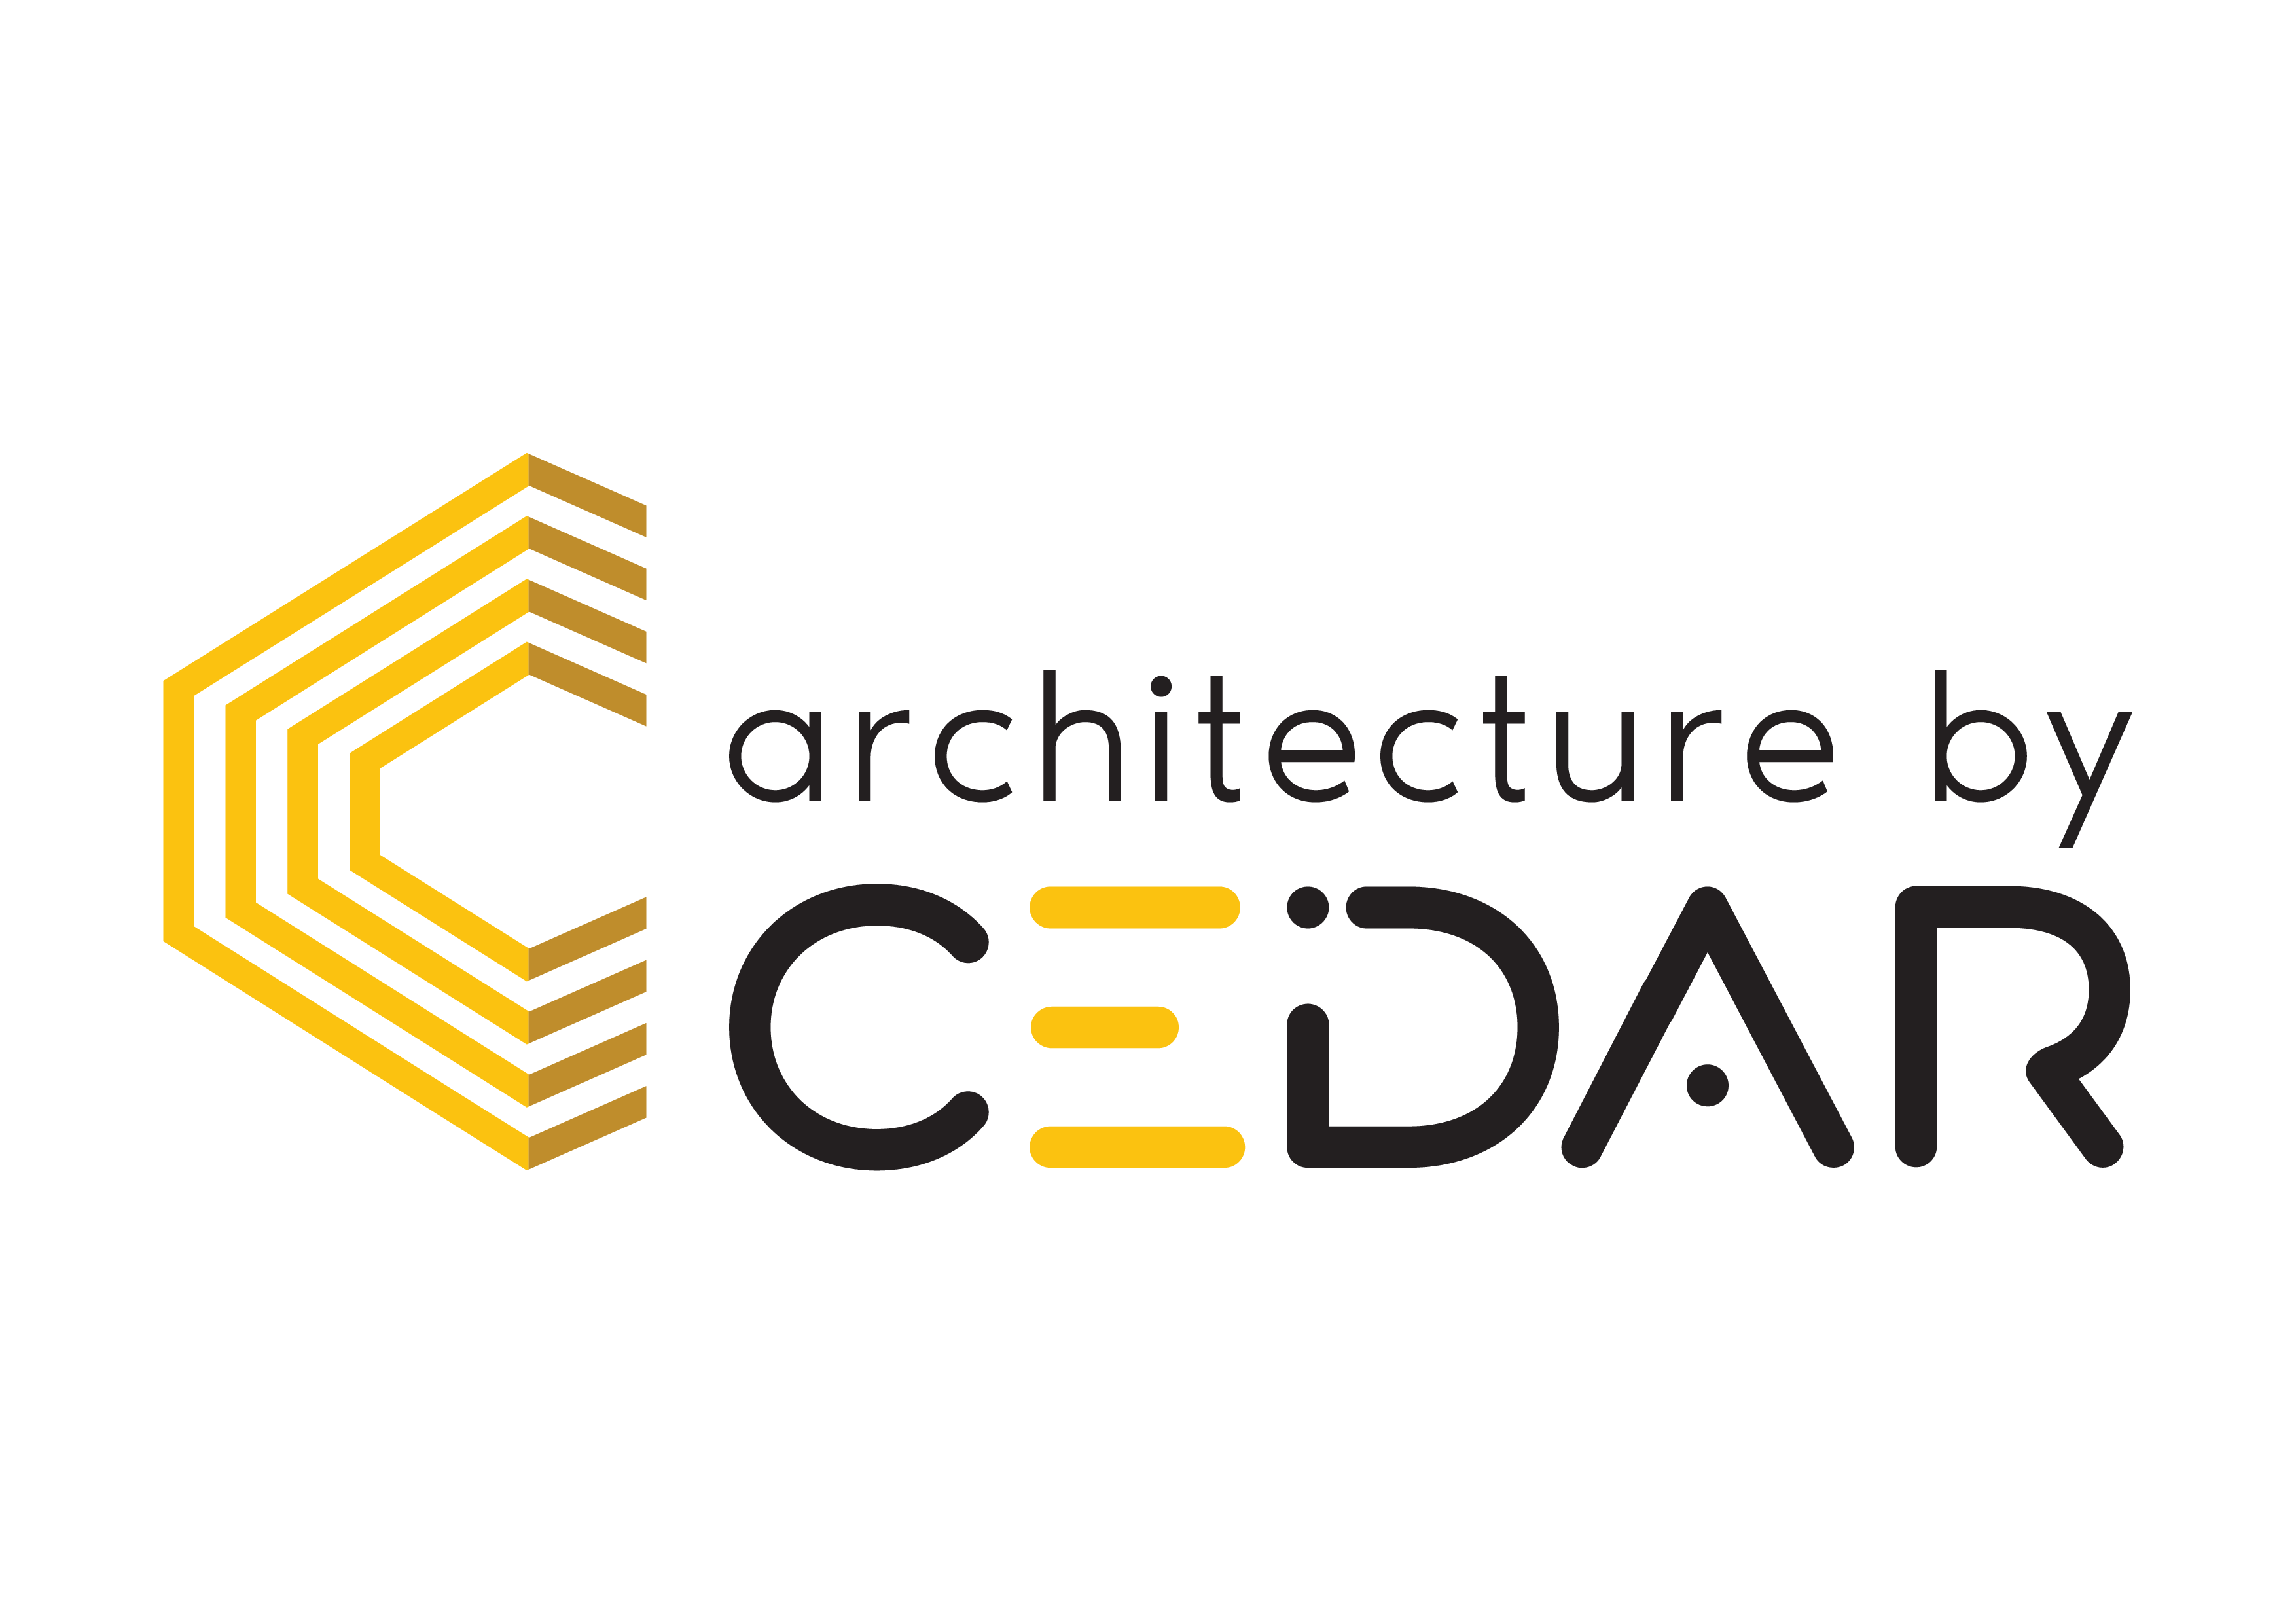 Architecture by Cedar